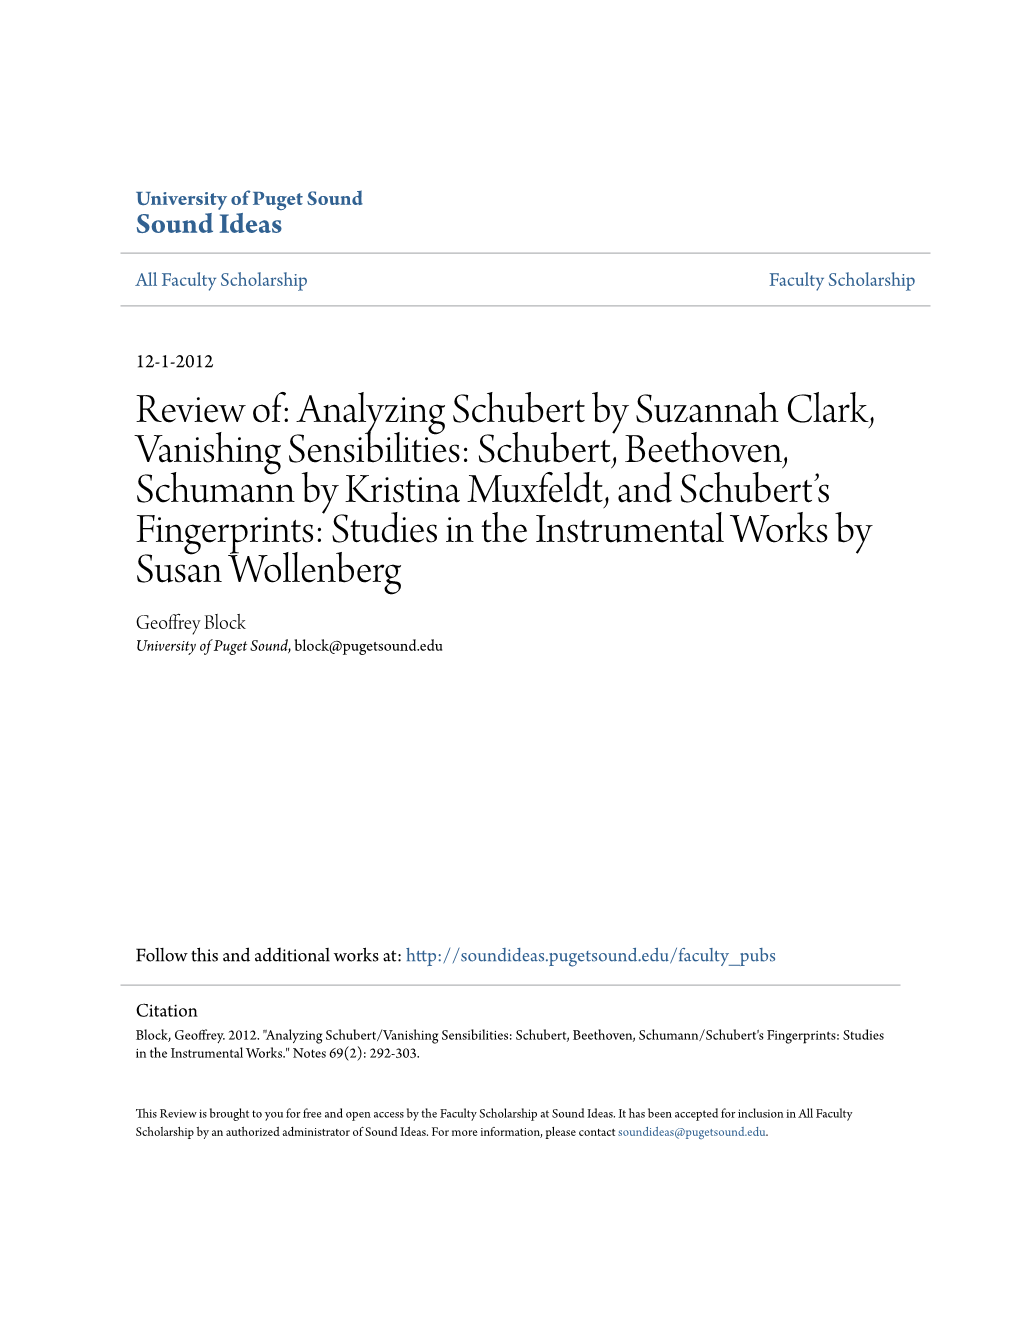 Review Of: Analyzing Schubert by Suzannah Clark, Vanishing